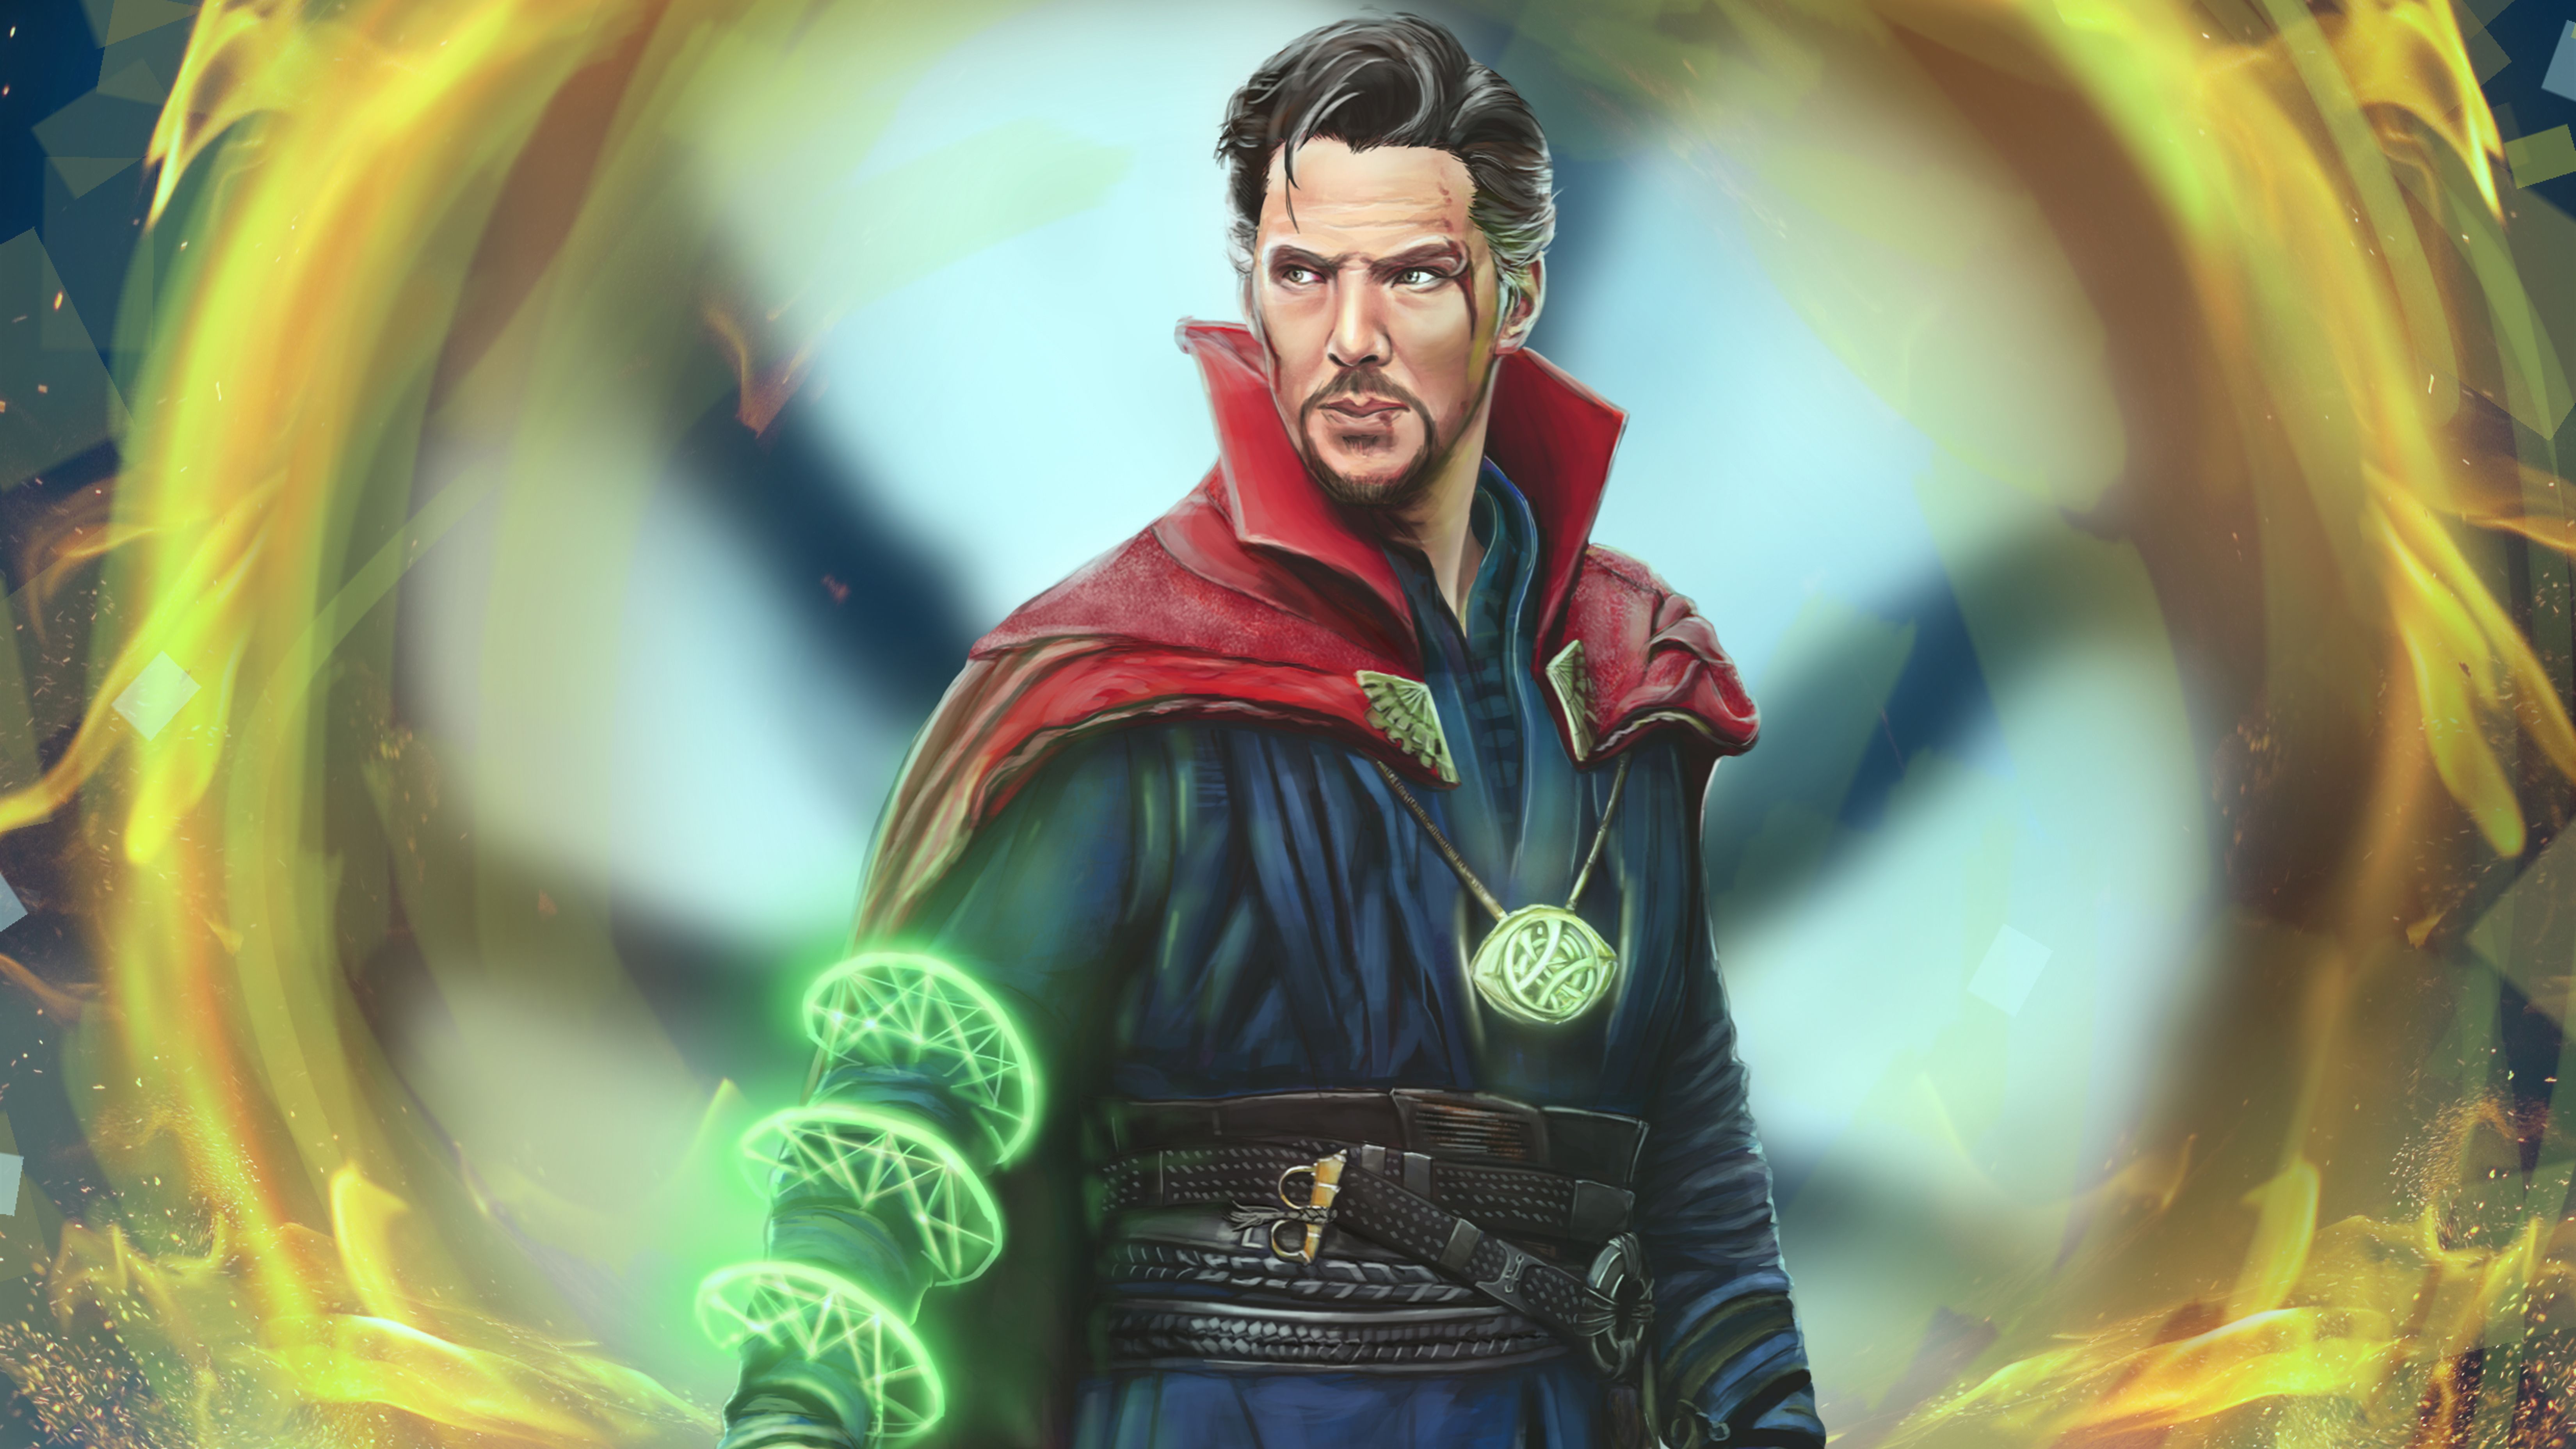 Doctor Strange Marvel Comic Art 5k, HD Superheroes, 4k Wallpaper, Image, Background, Photo and Picture